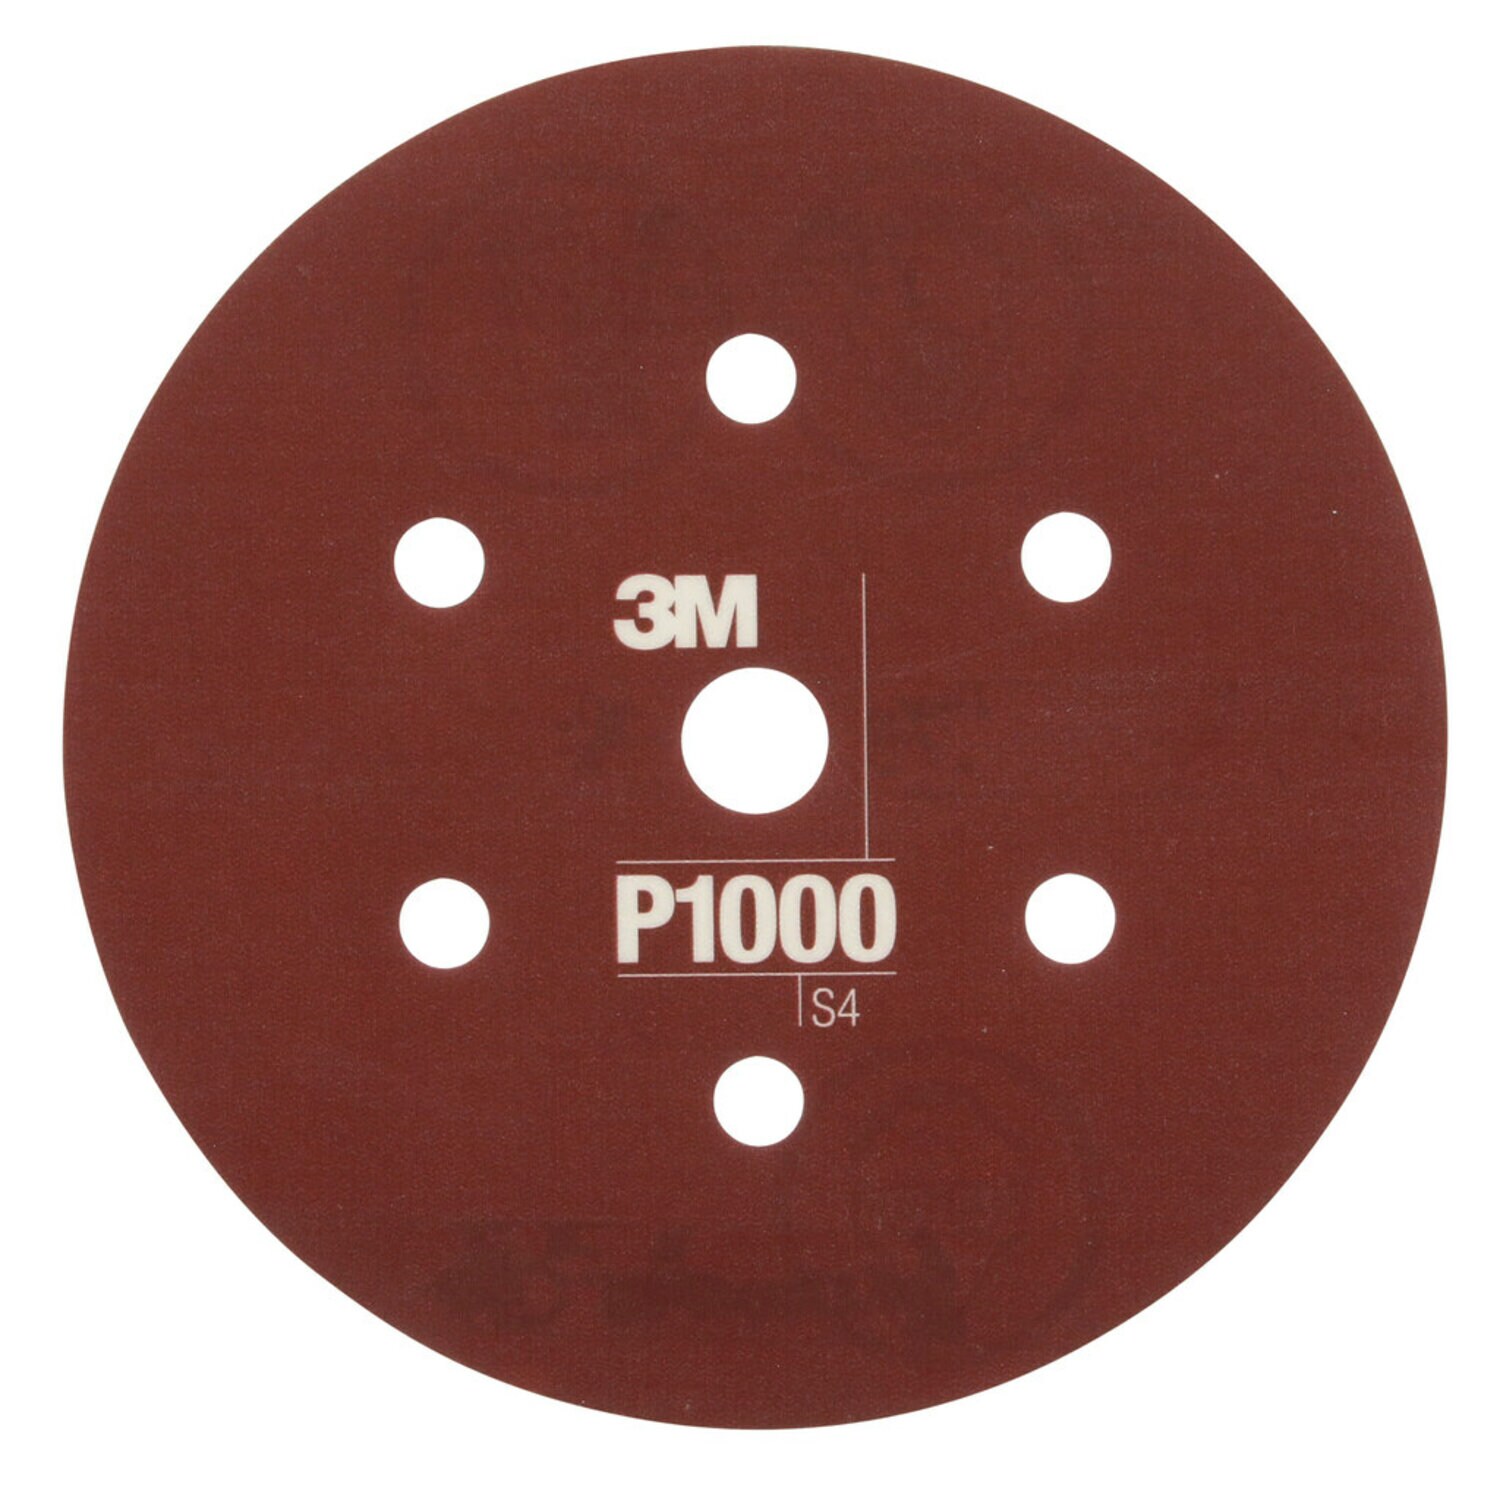 7000120196 - 3M Hookit Flexible Abrasive Disc 270J, 34407, 6 in, Dust Free, P1000,
25 disc per carton, 5 cartons per case